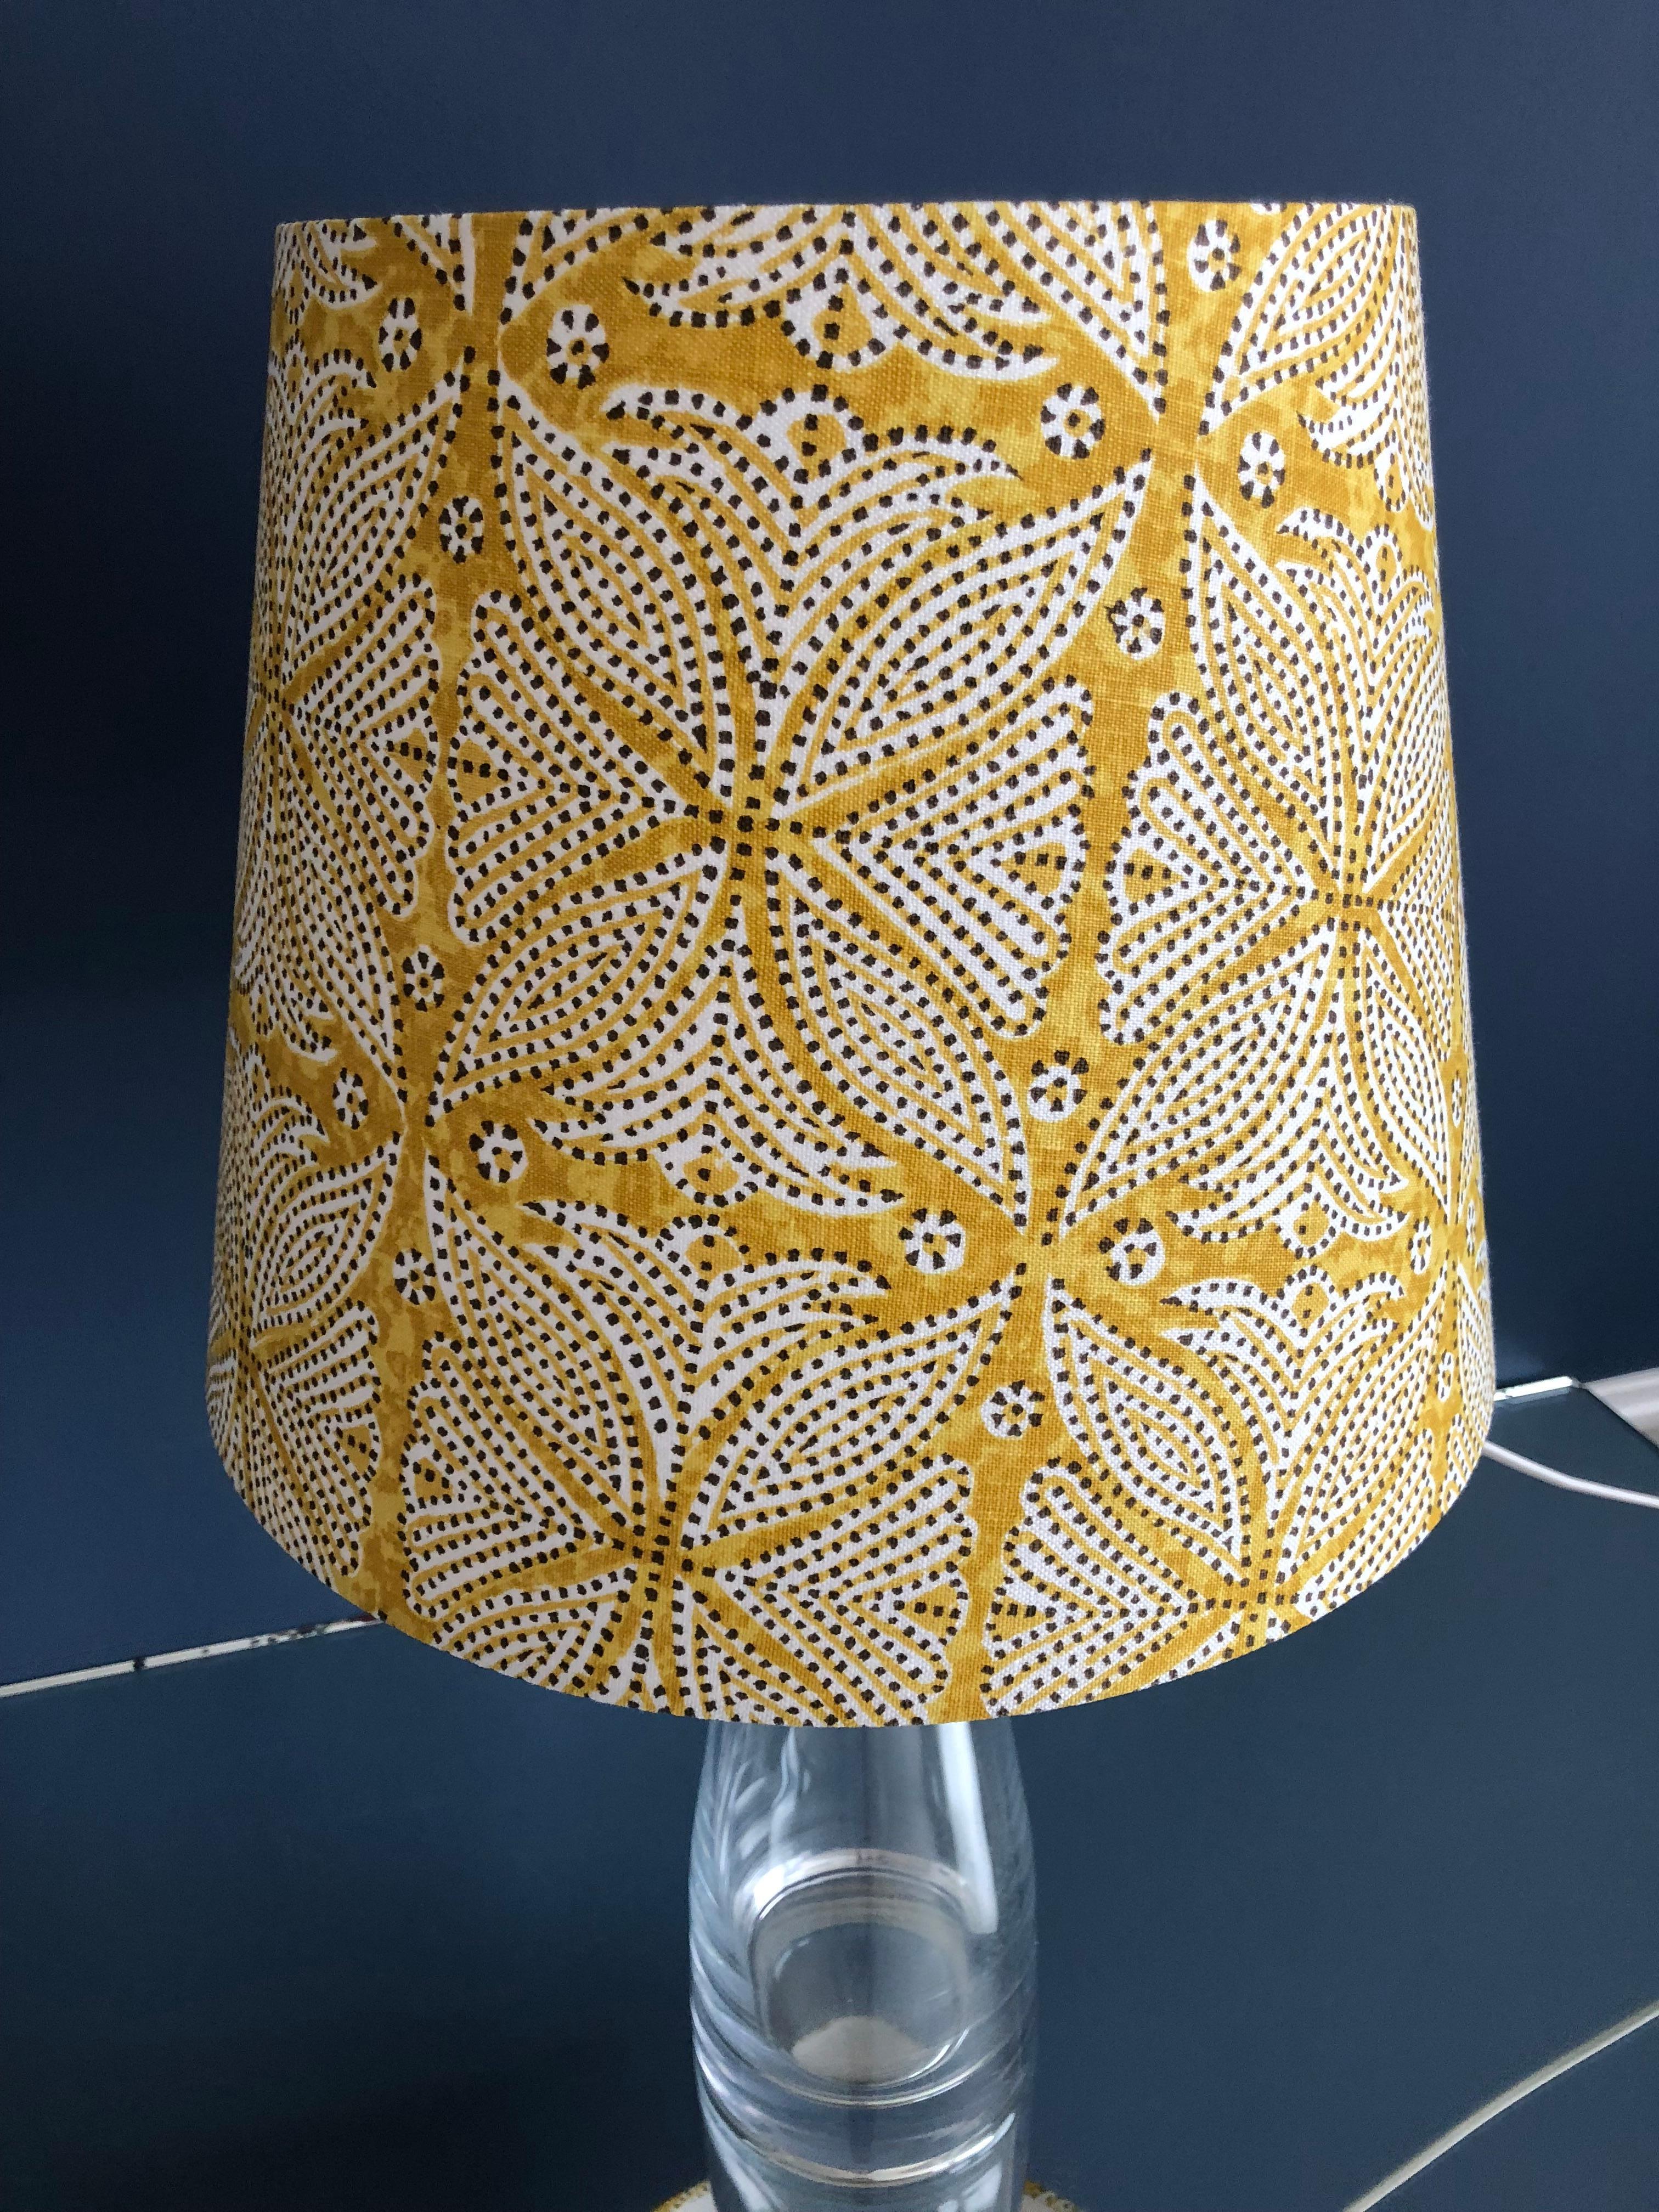 artek table lamp